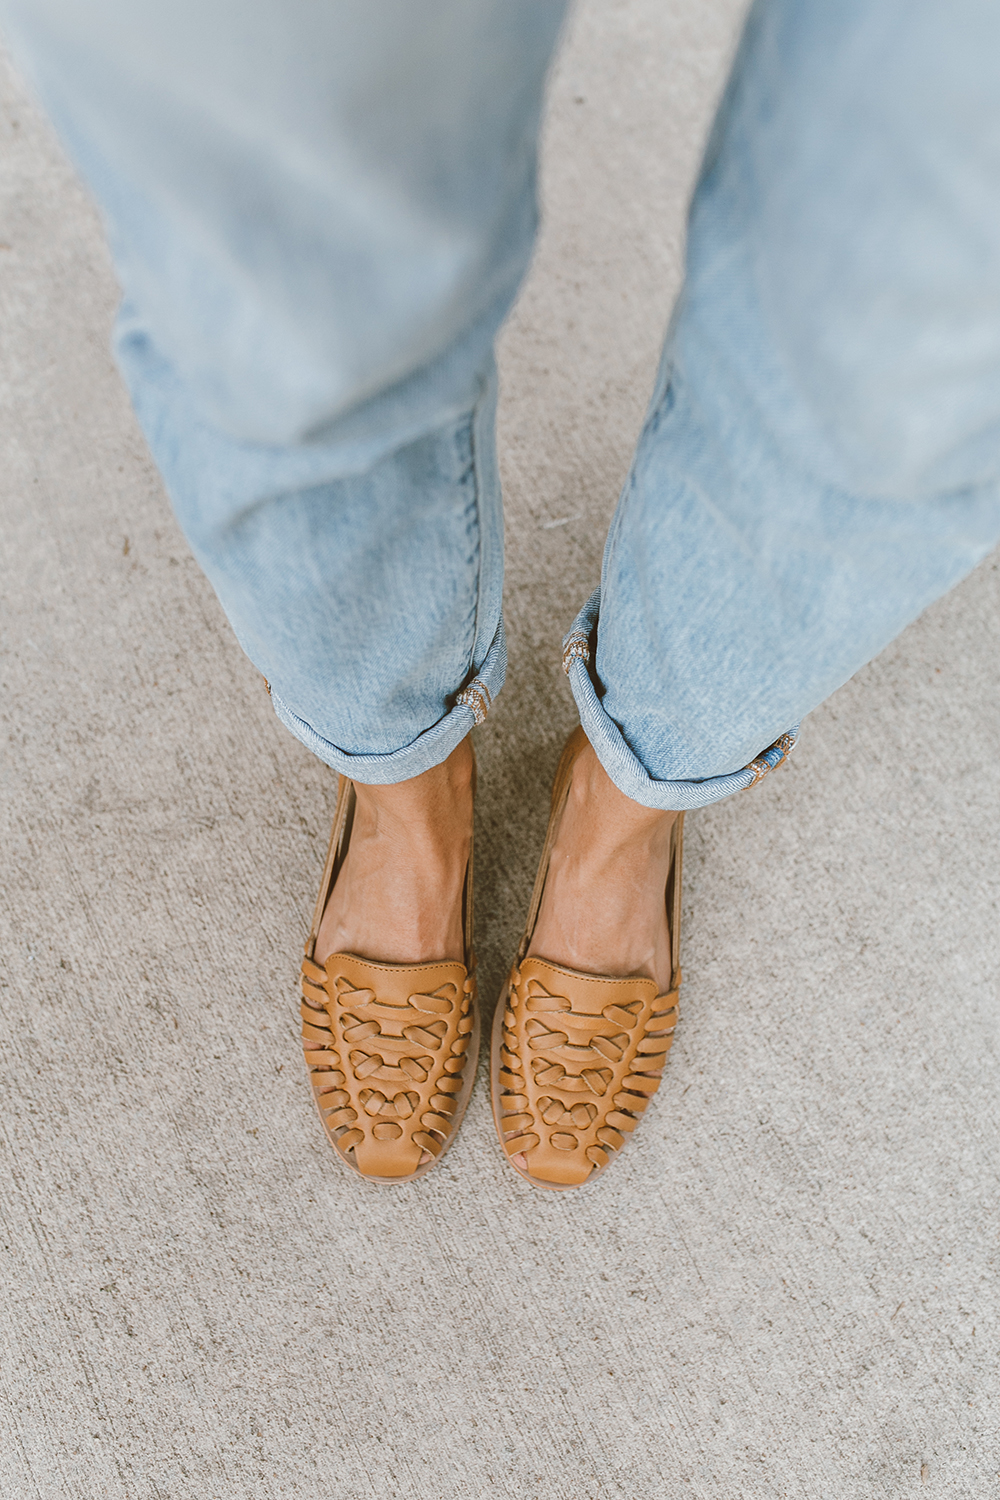 livvyland-blog-olivia-watson-austin-texas-fashion-style-blog-nisolo-ecuador-huarche-sandals-almond-tee-jeans-outfit-3